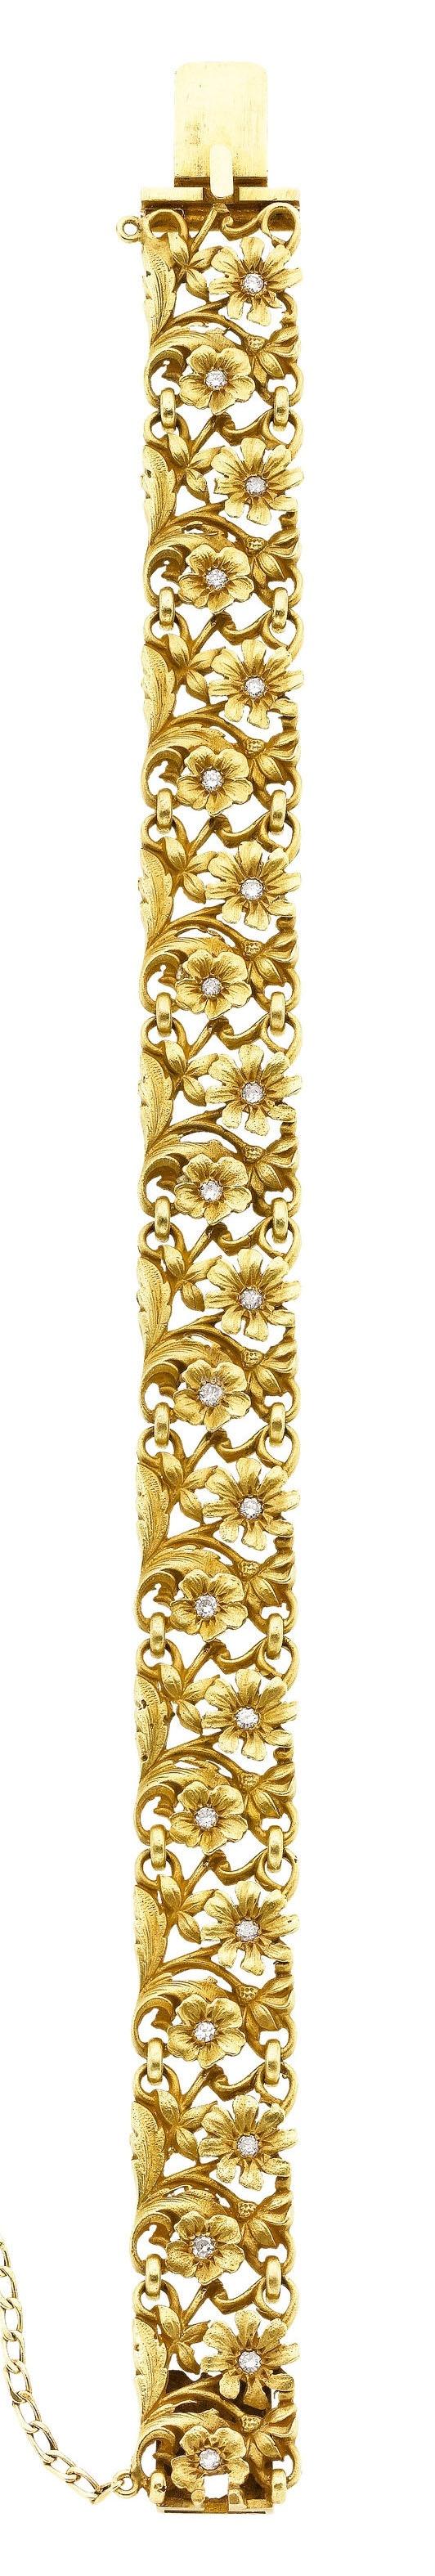 Mariage - Jewelry: Art Nouveau